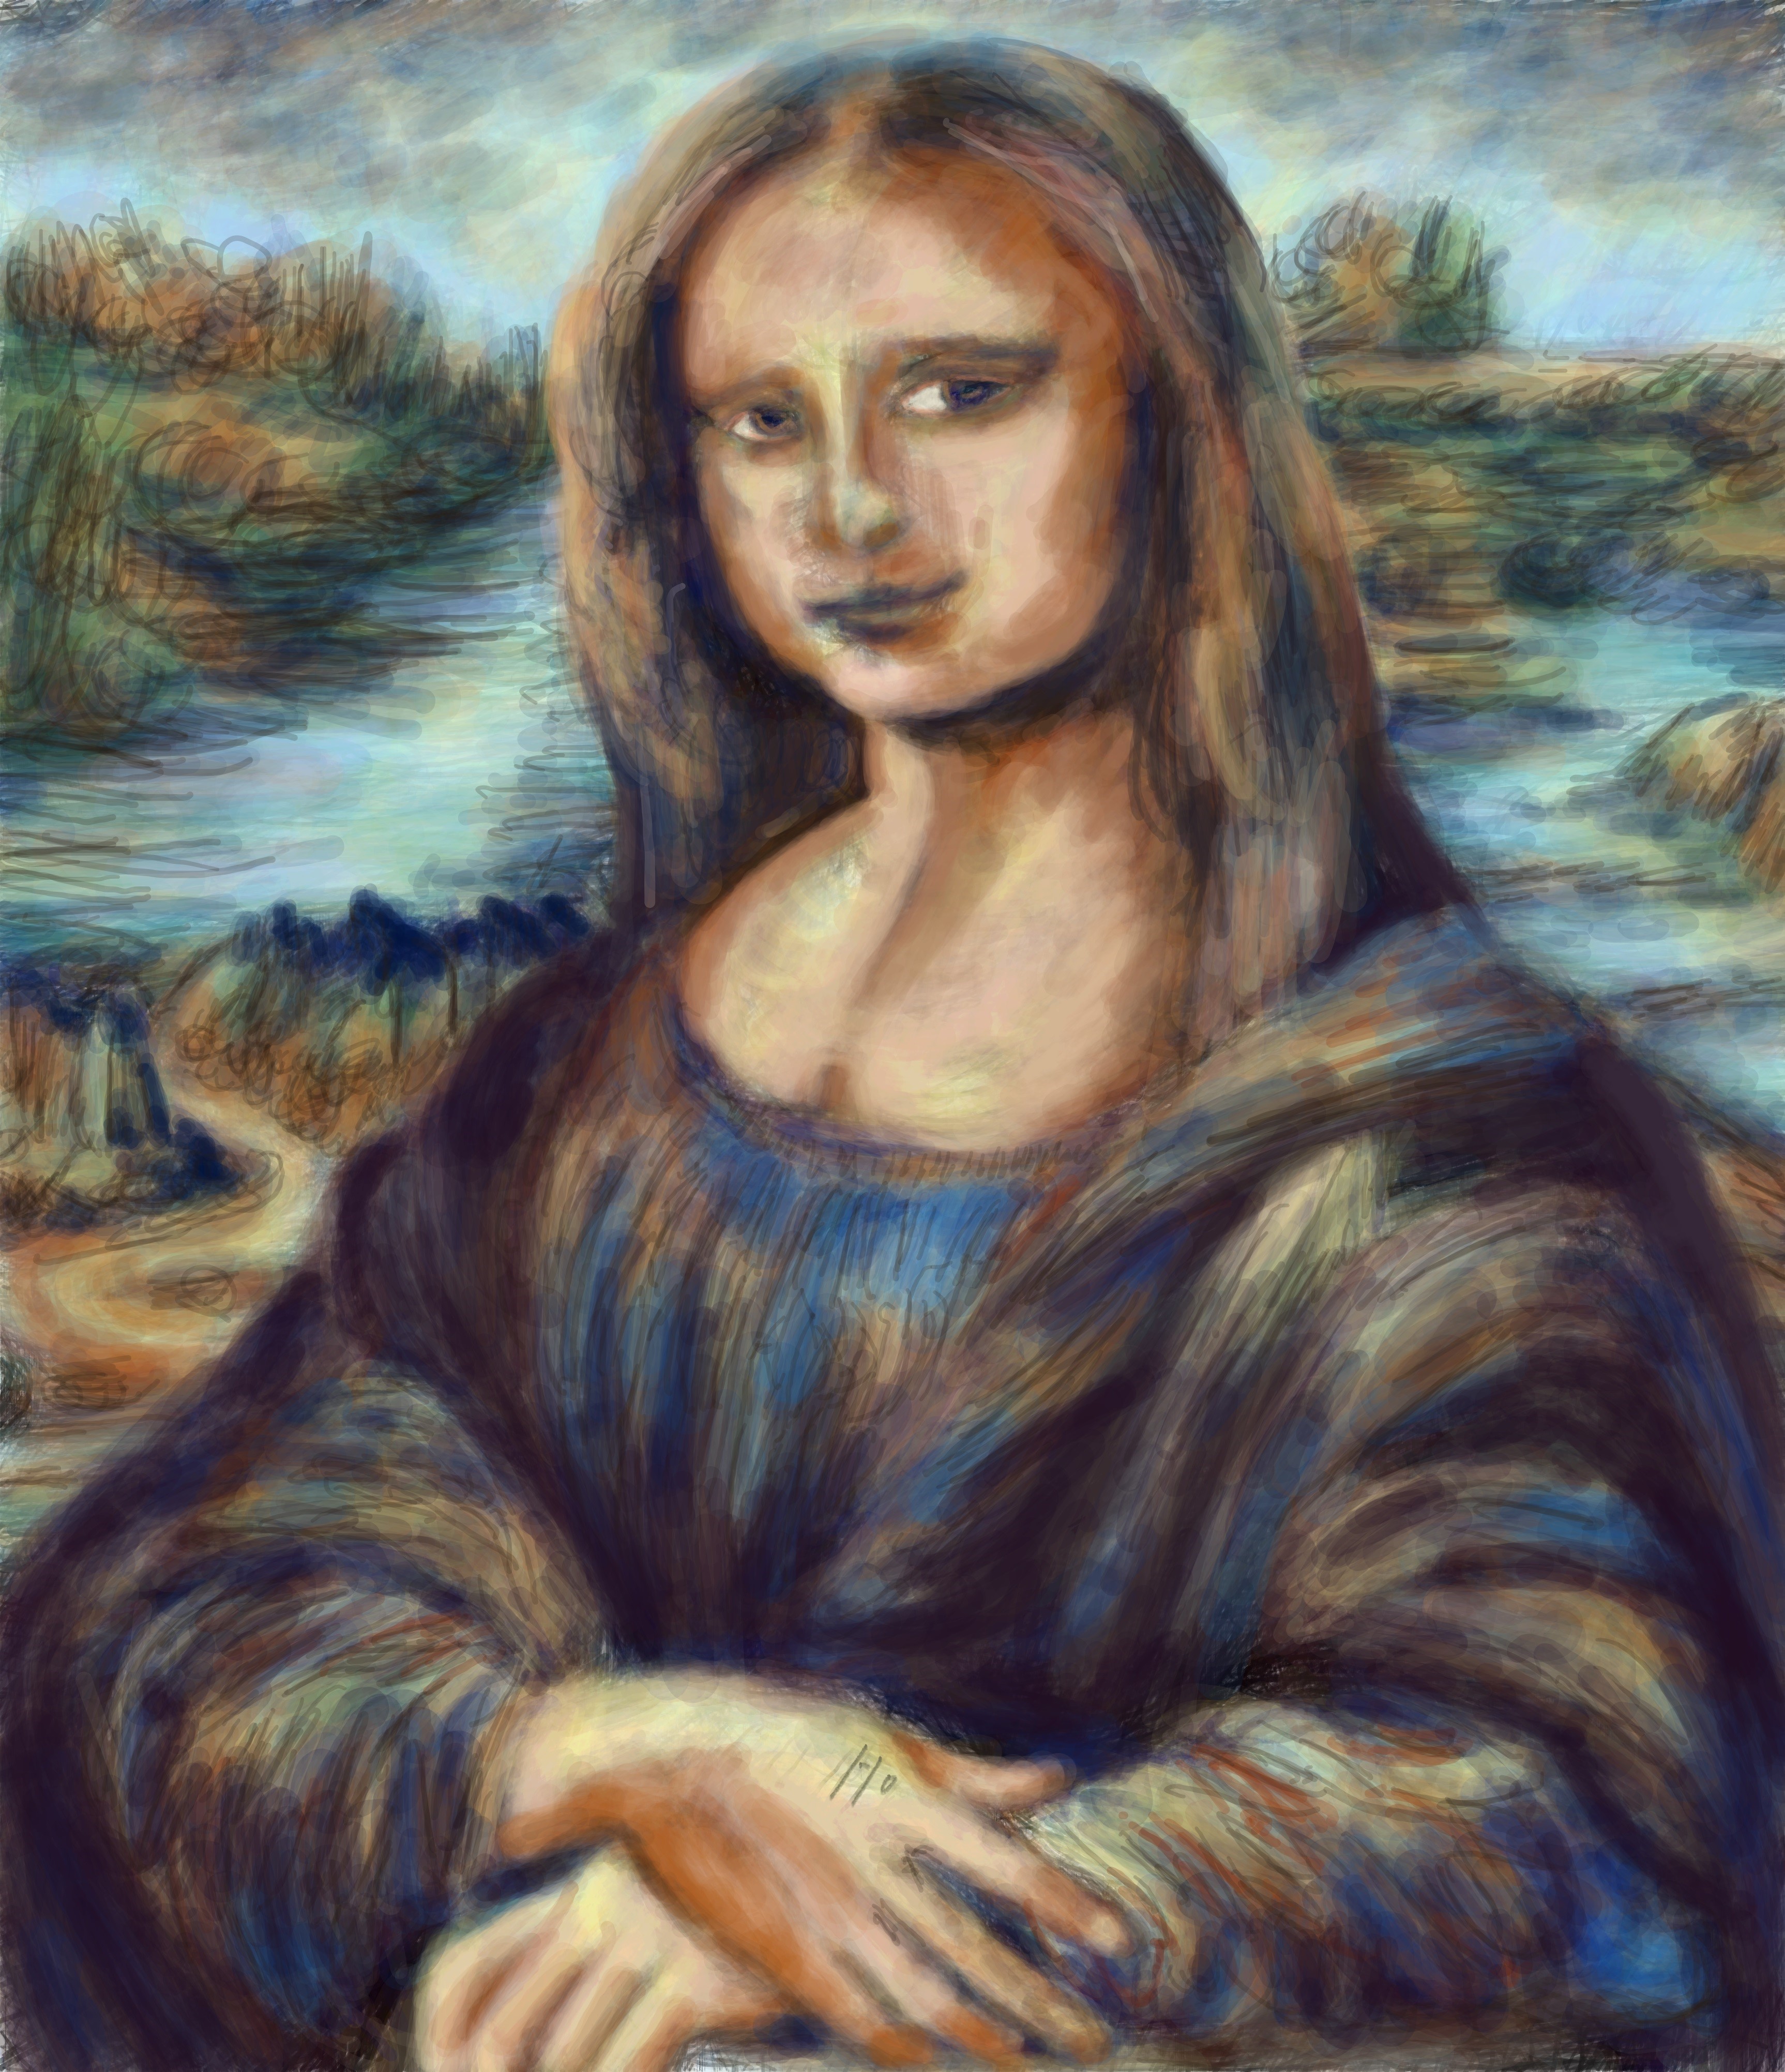 People 3452x4008 Mona Lisa Leonardo da Vinci painting digital painting classic art oil painting nature women AI art